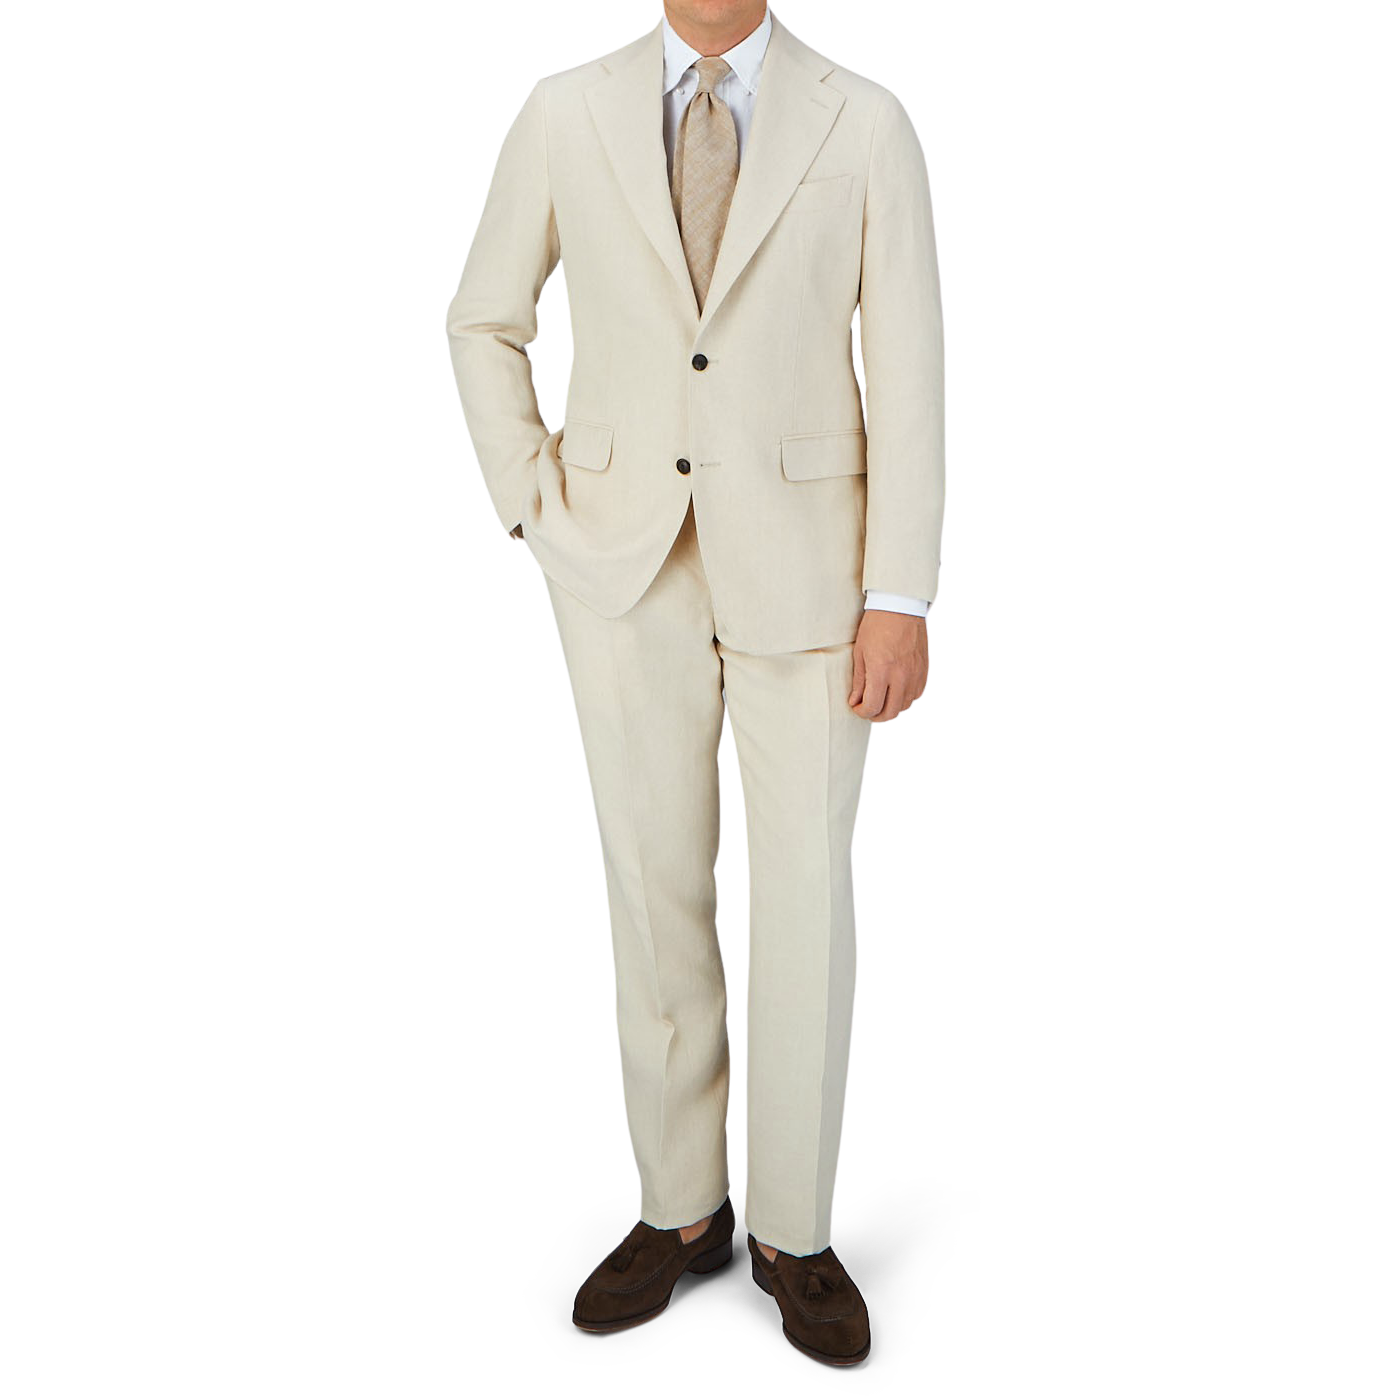 A man is posing in a Light Beige Pure Linen Suit Jacket by Baltzar Sartorial.